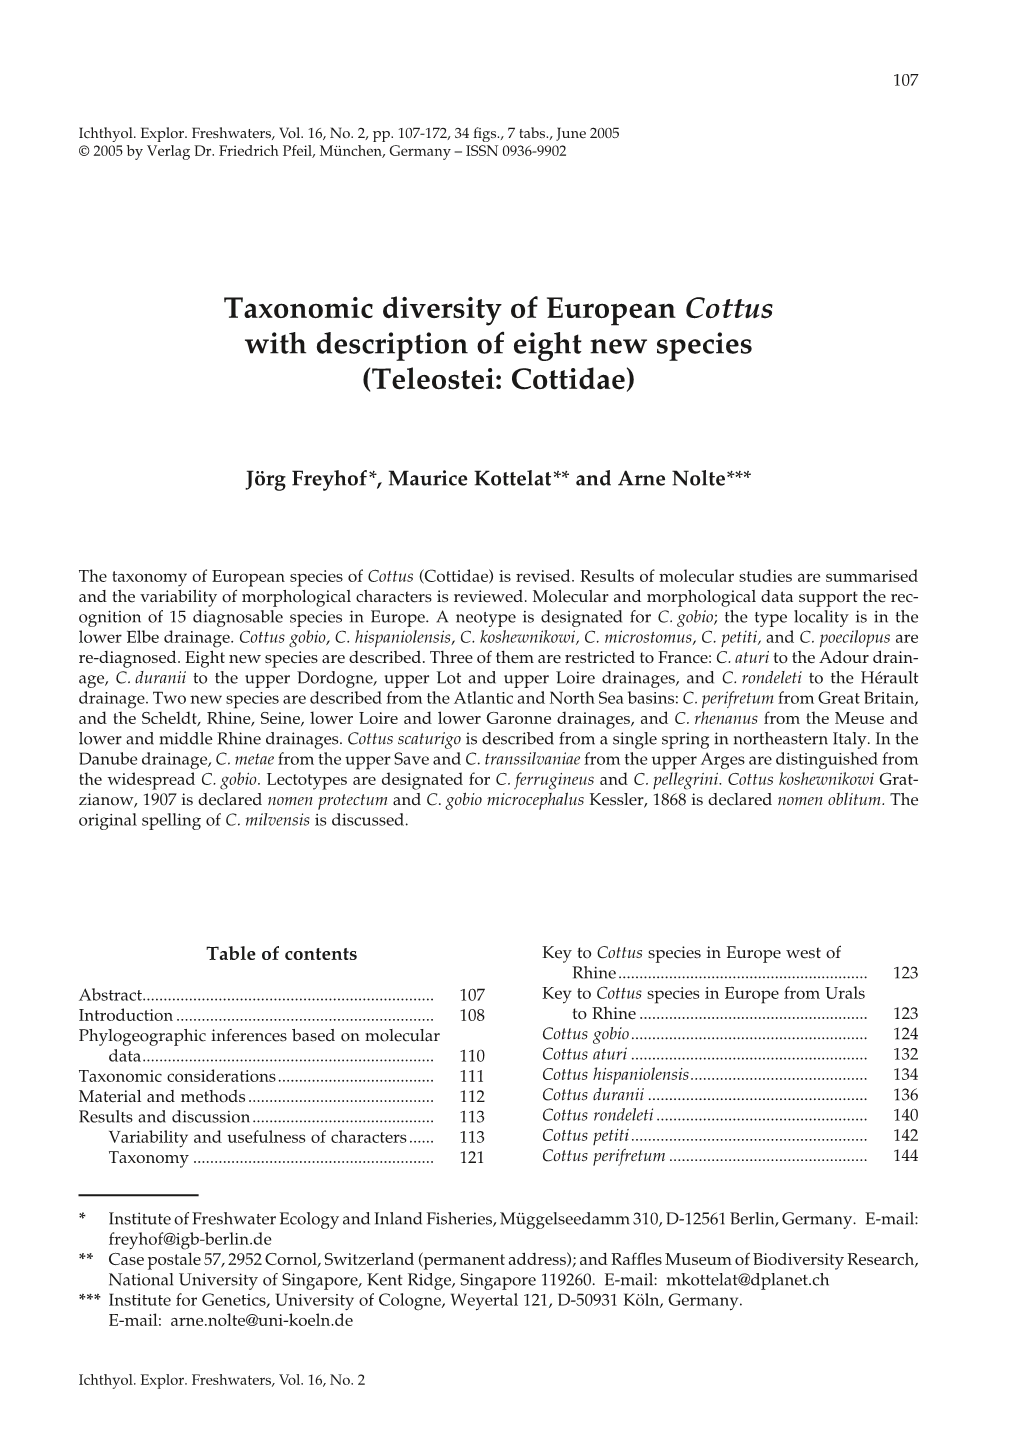 Taxonomic Diversity of European Cottus with Description of Eight New Species (Teleostei: Cottidae)